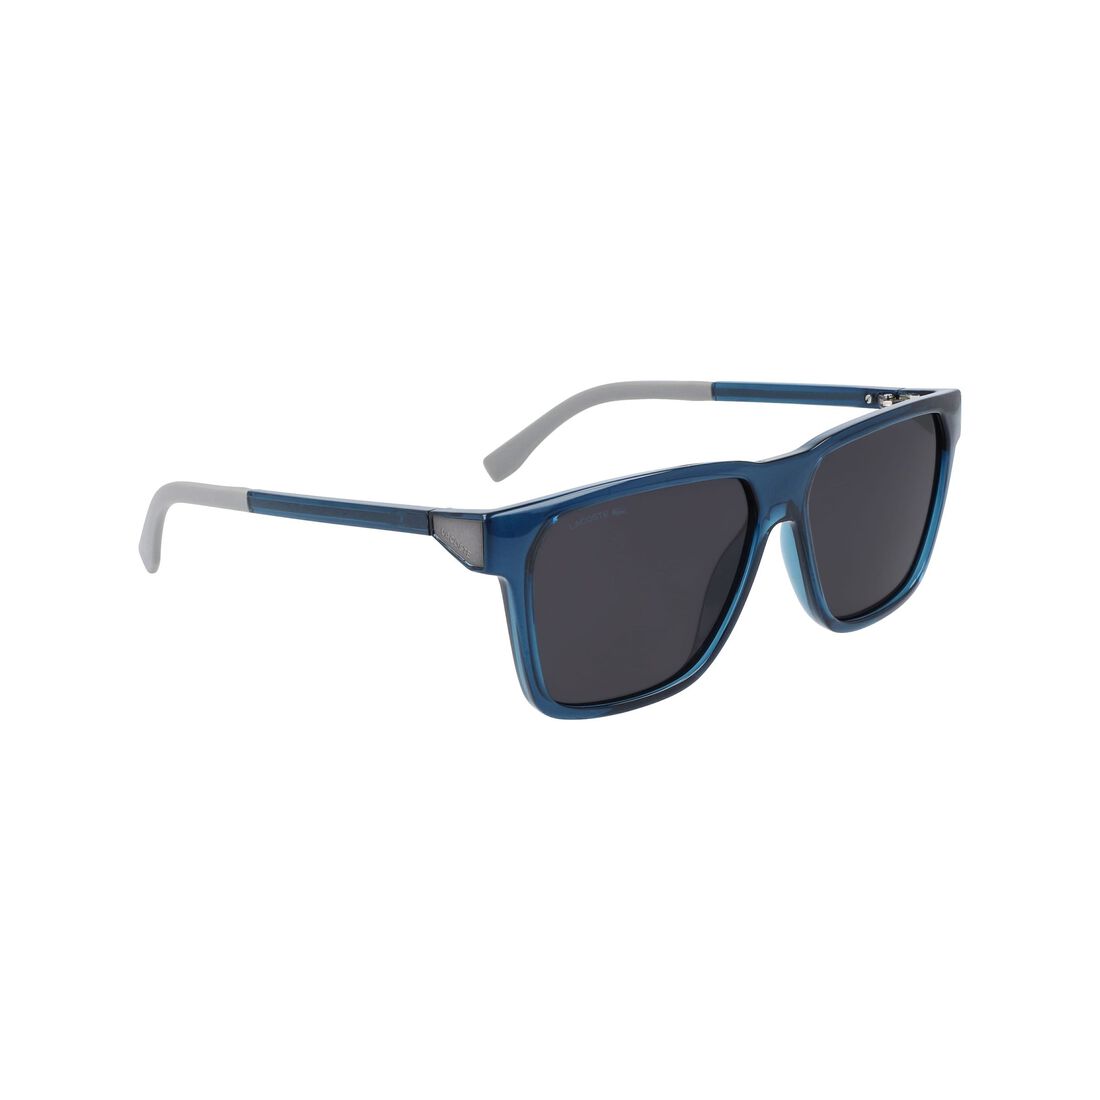 Lacoste Injected Sonnenbrille Herren Blau | URLG-16734